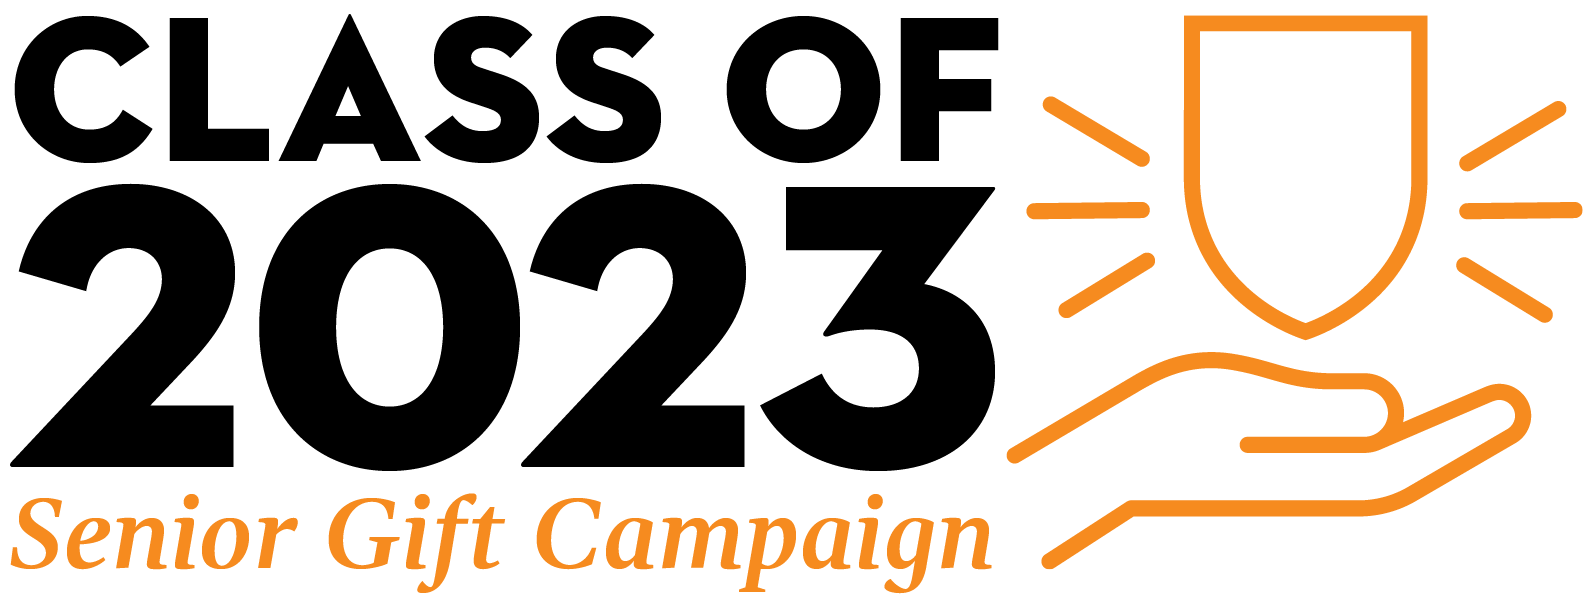 2023 Senior Gift Campaign logo